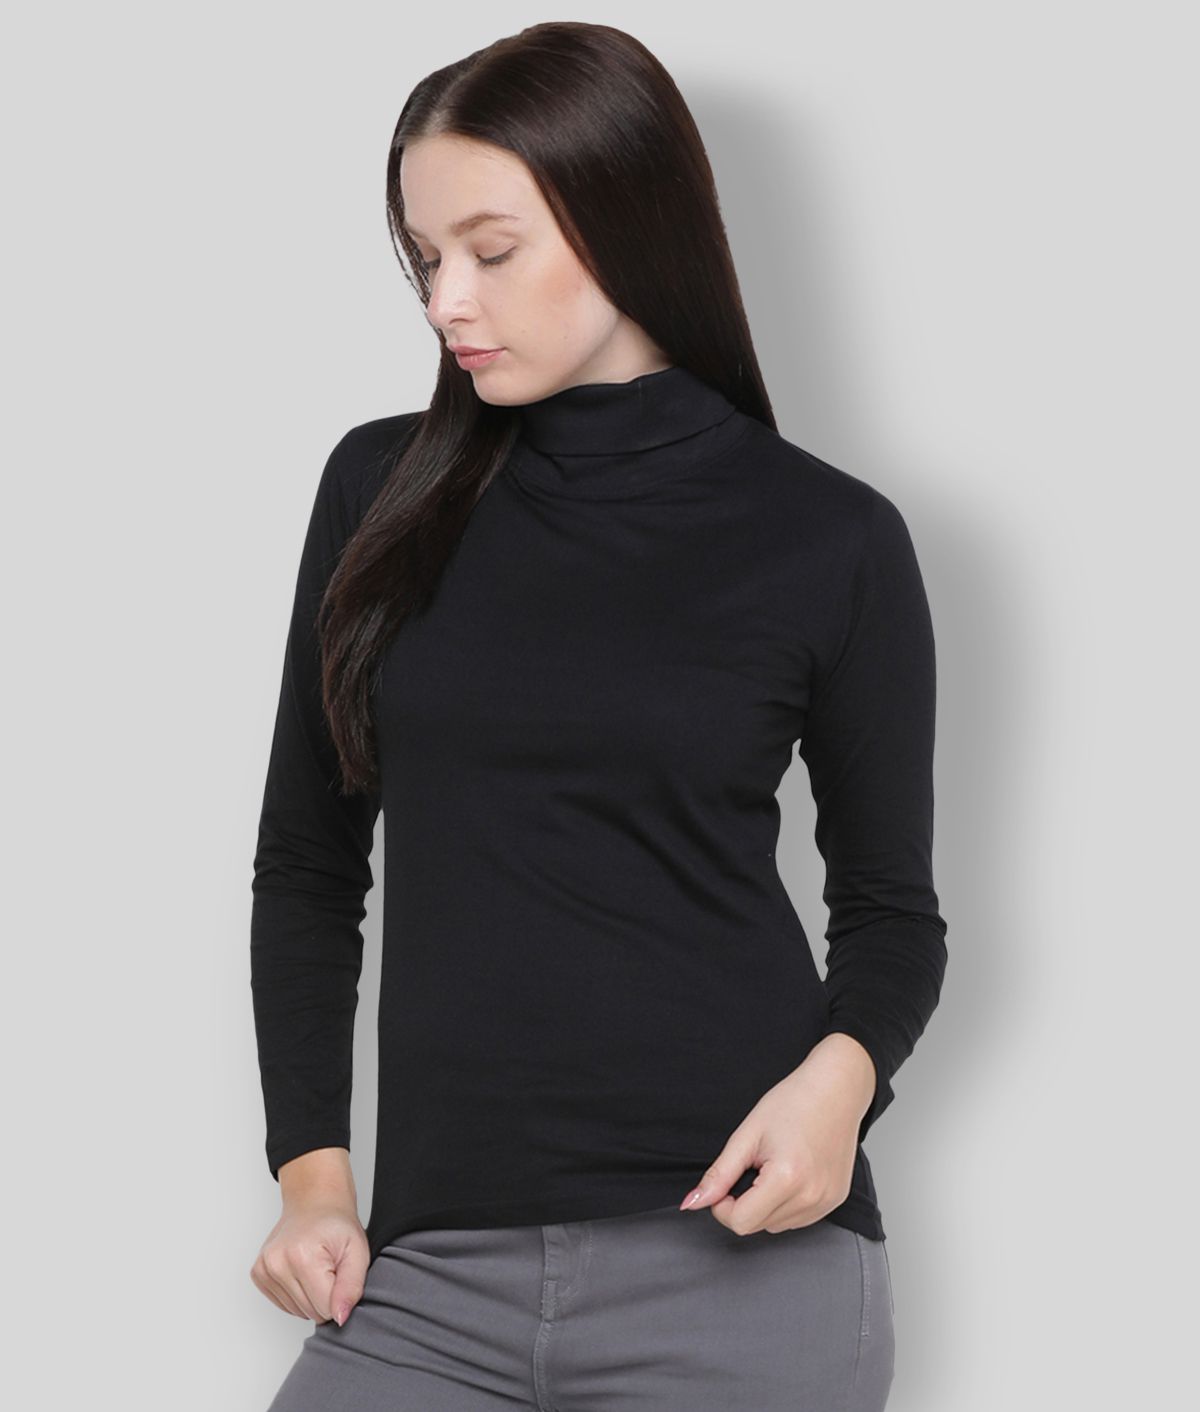 PRETTE - Black Cotton Regular Fit Women's T-Shirt ( Pack of 1 )